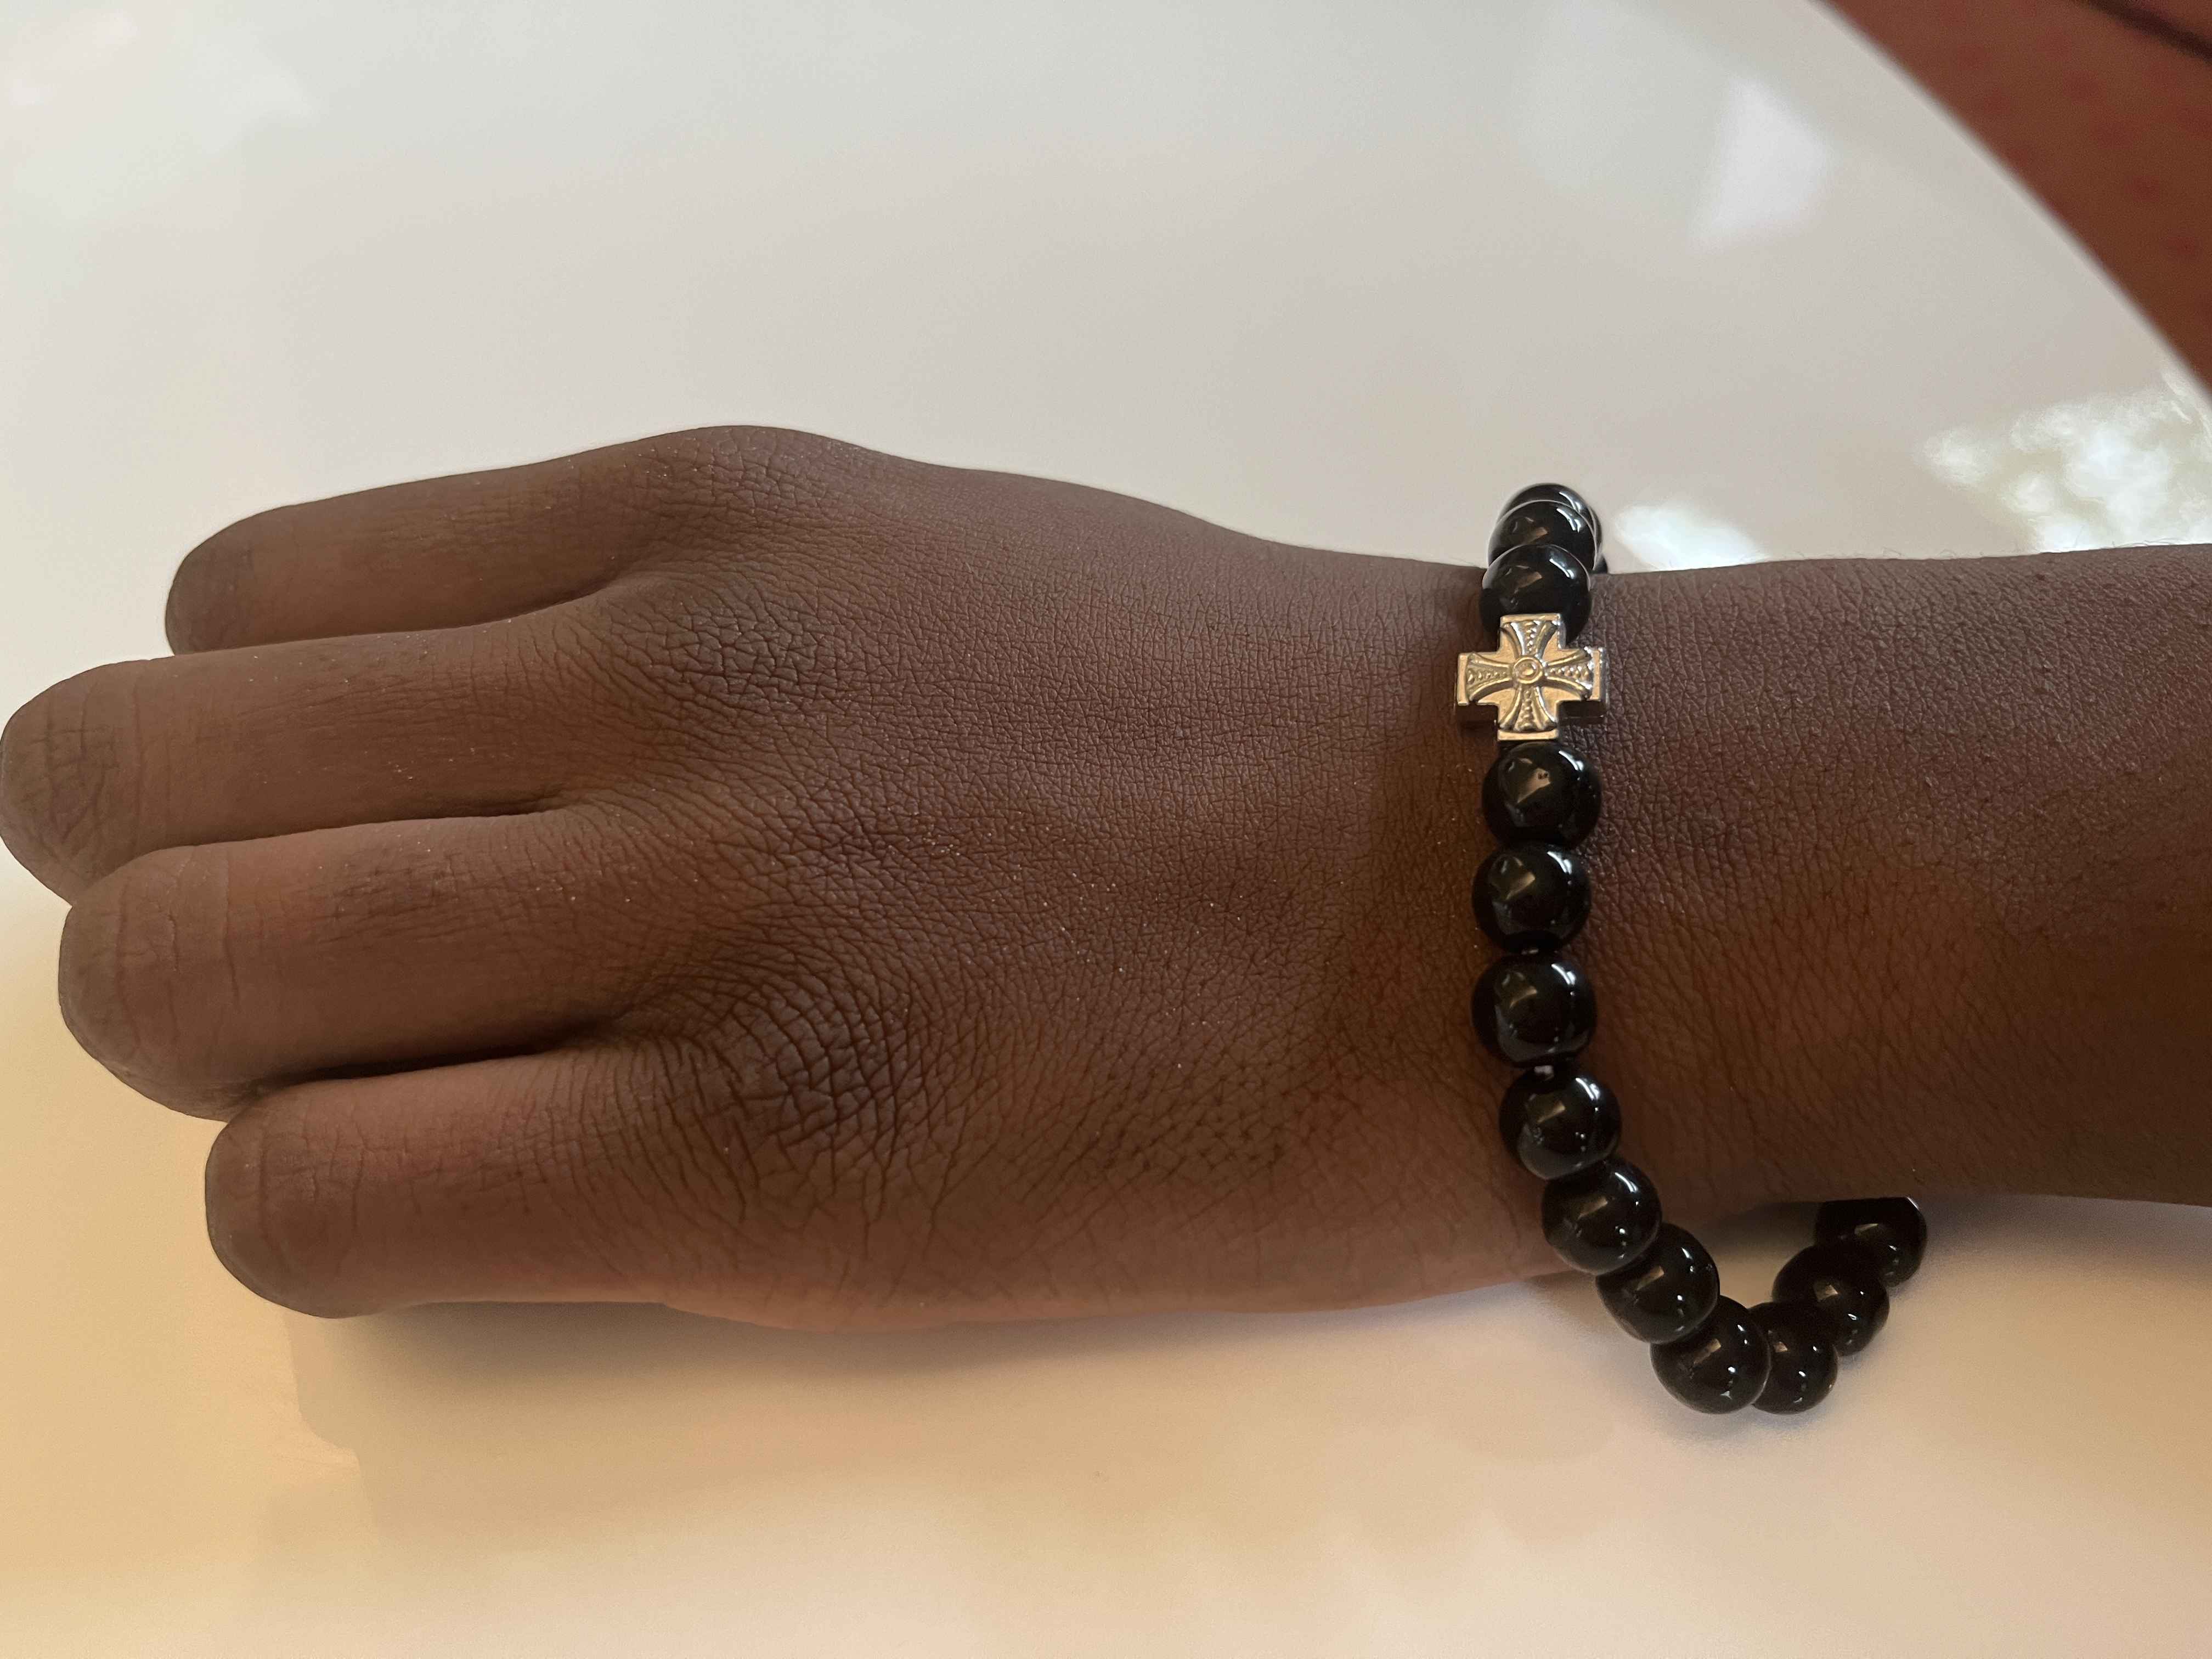 Black beaded bracelet made at St. George Church, Addis Ababa